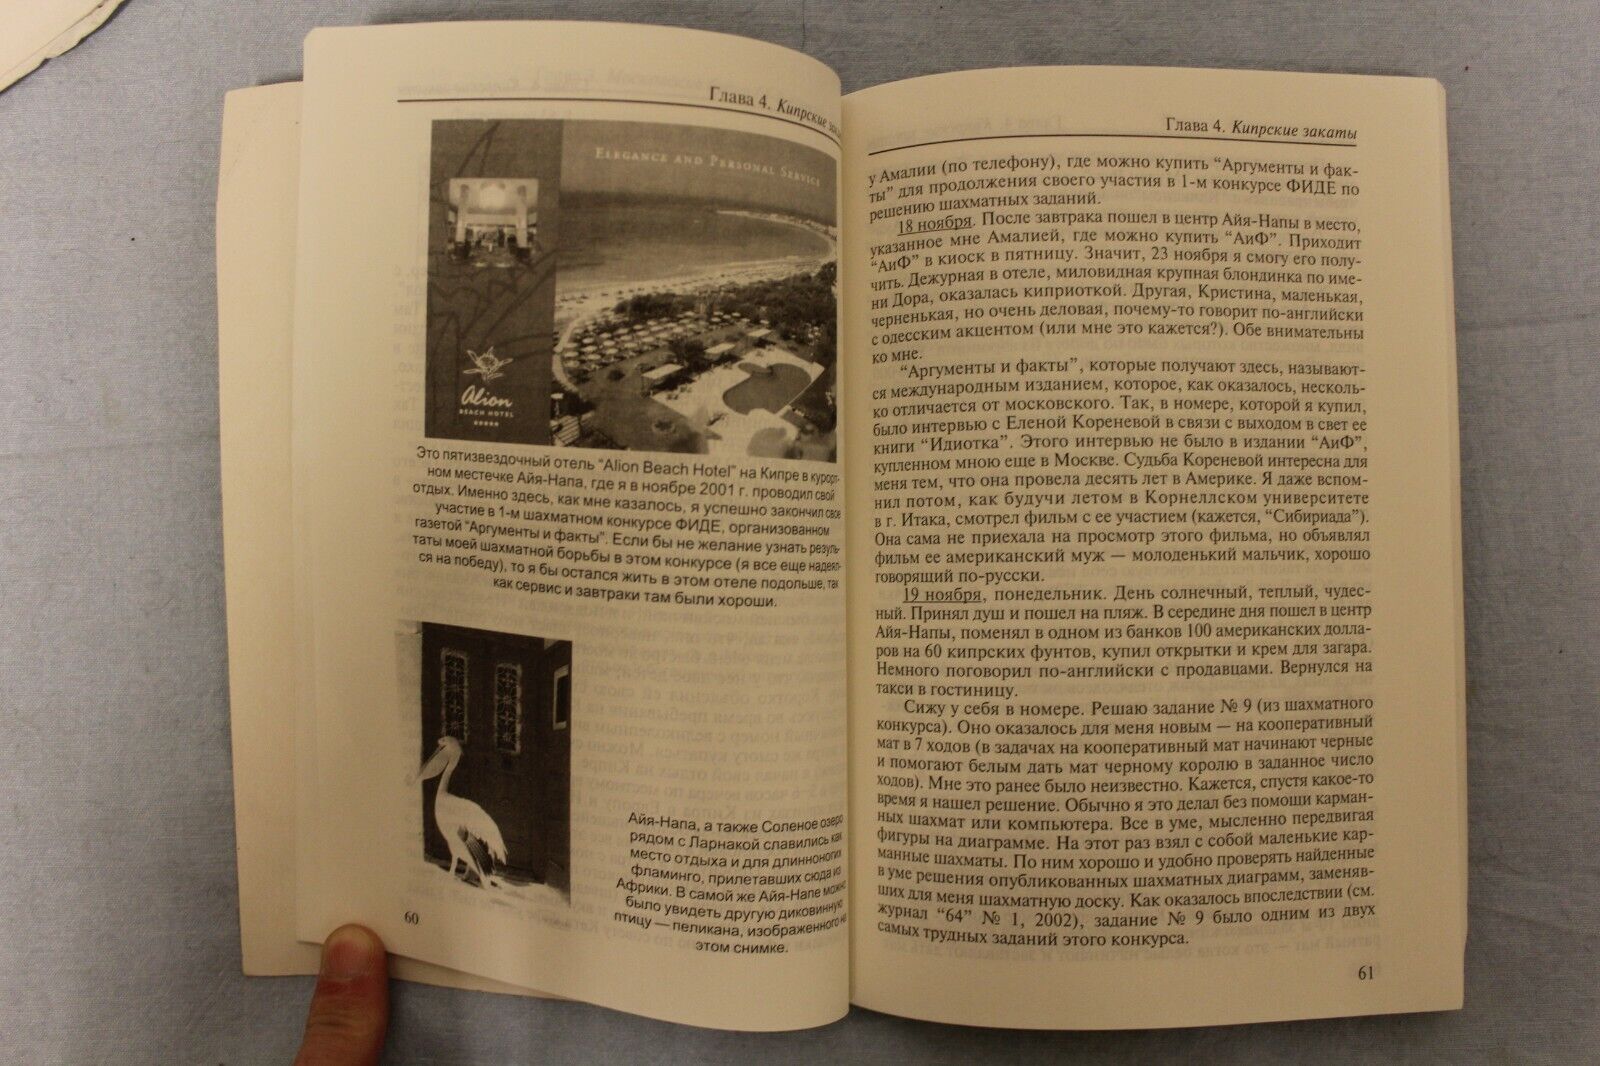 11028.Chess Book Signed Kitaygorodsky+his letters & photo.Karpov library.Printrun 100